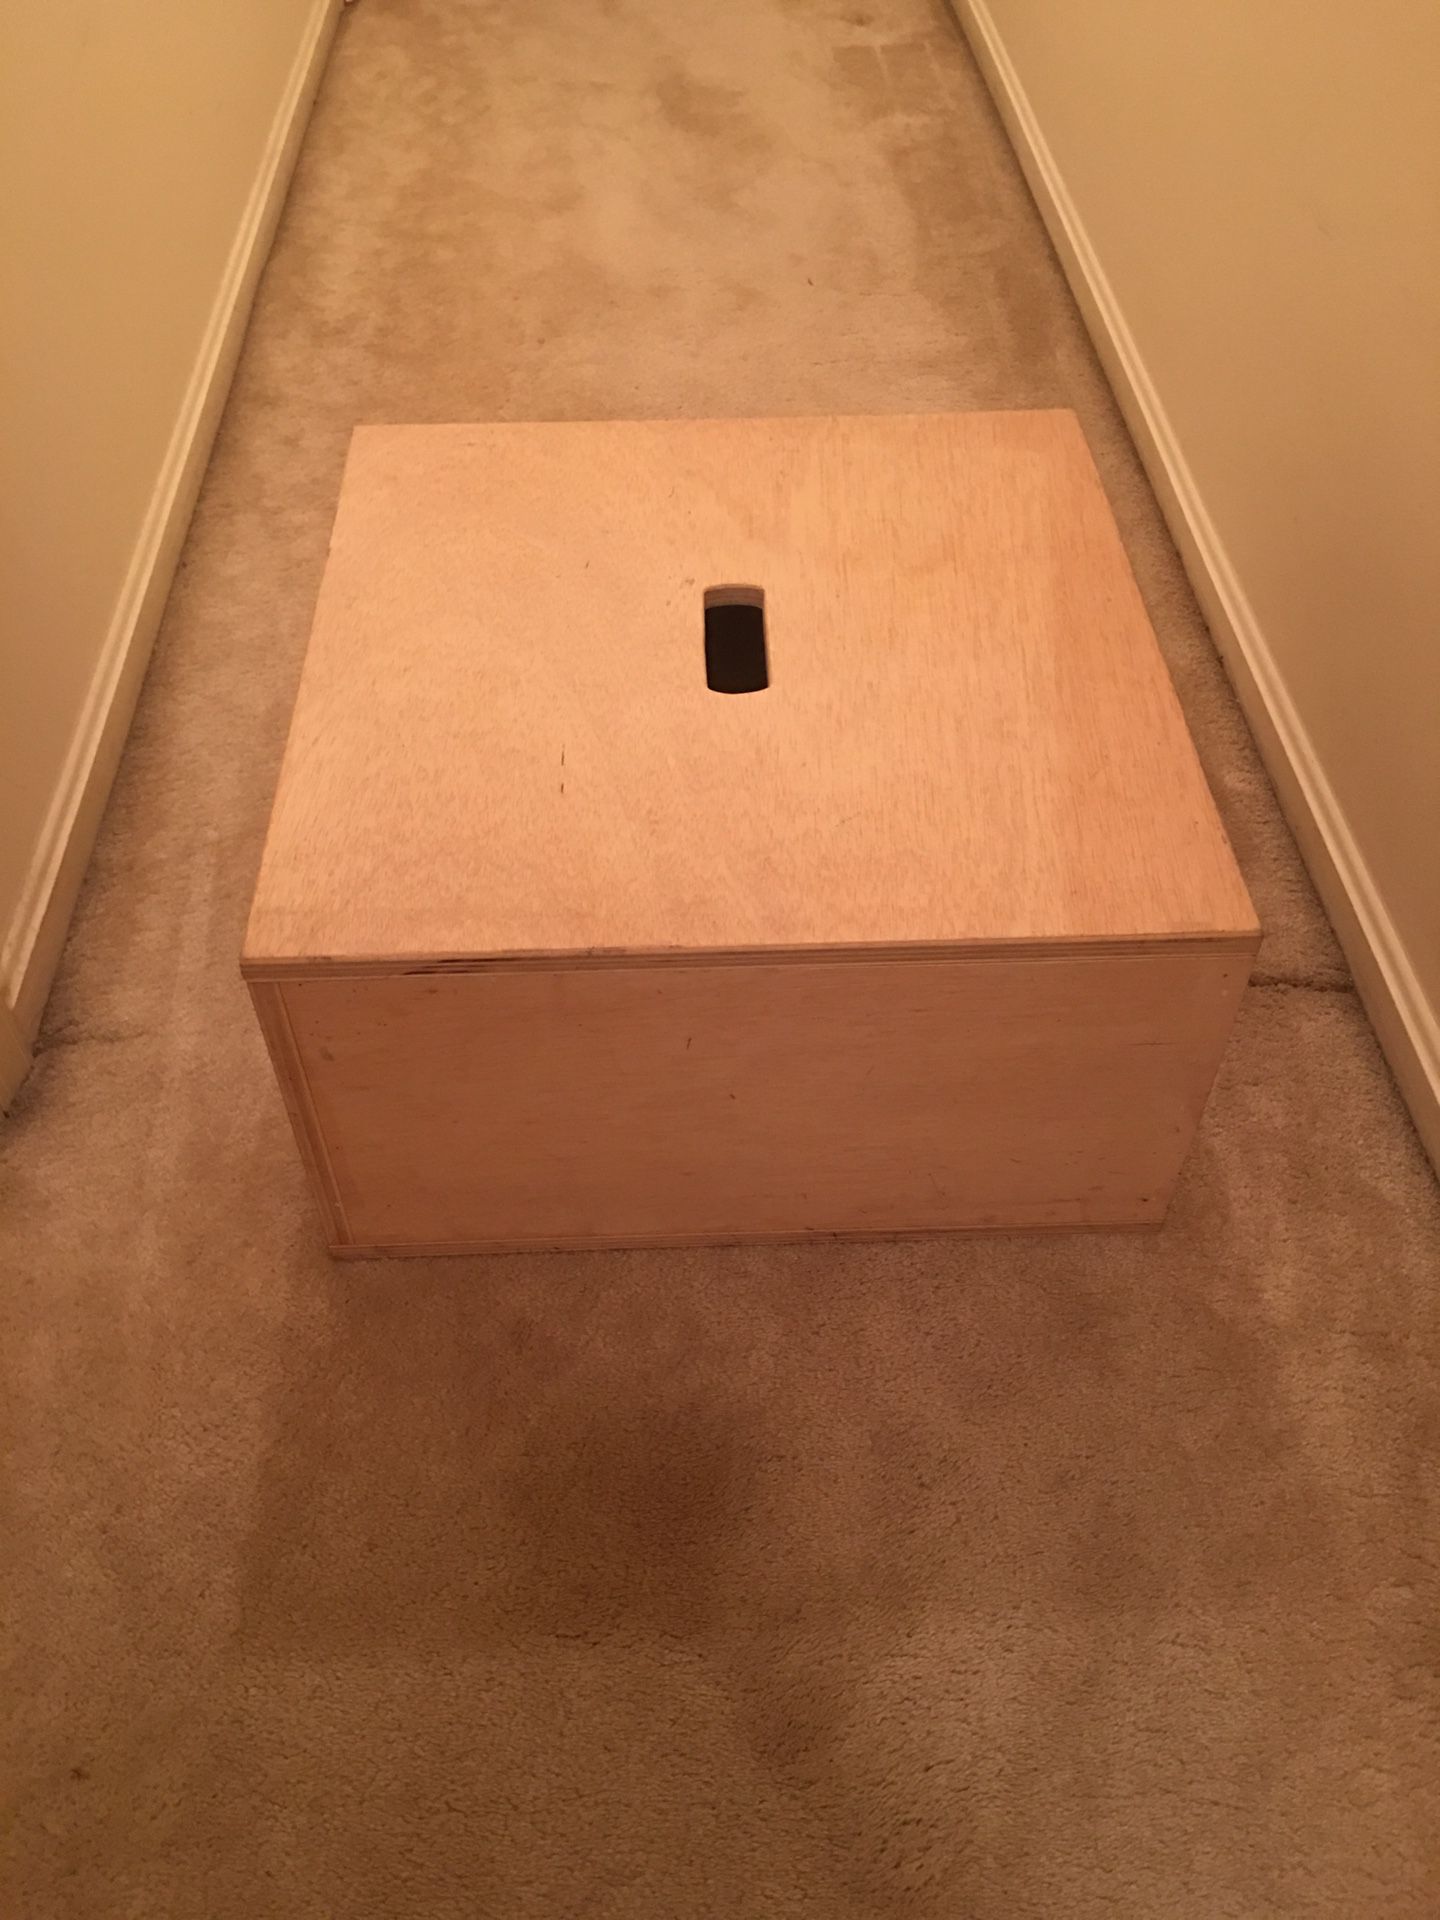 Large wooden storage box